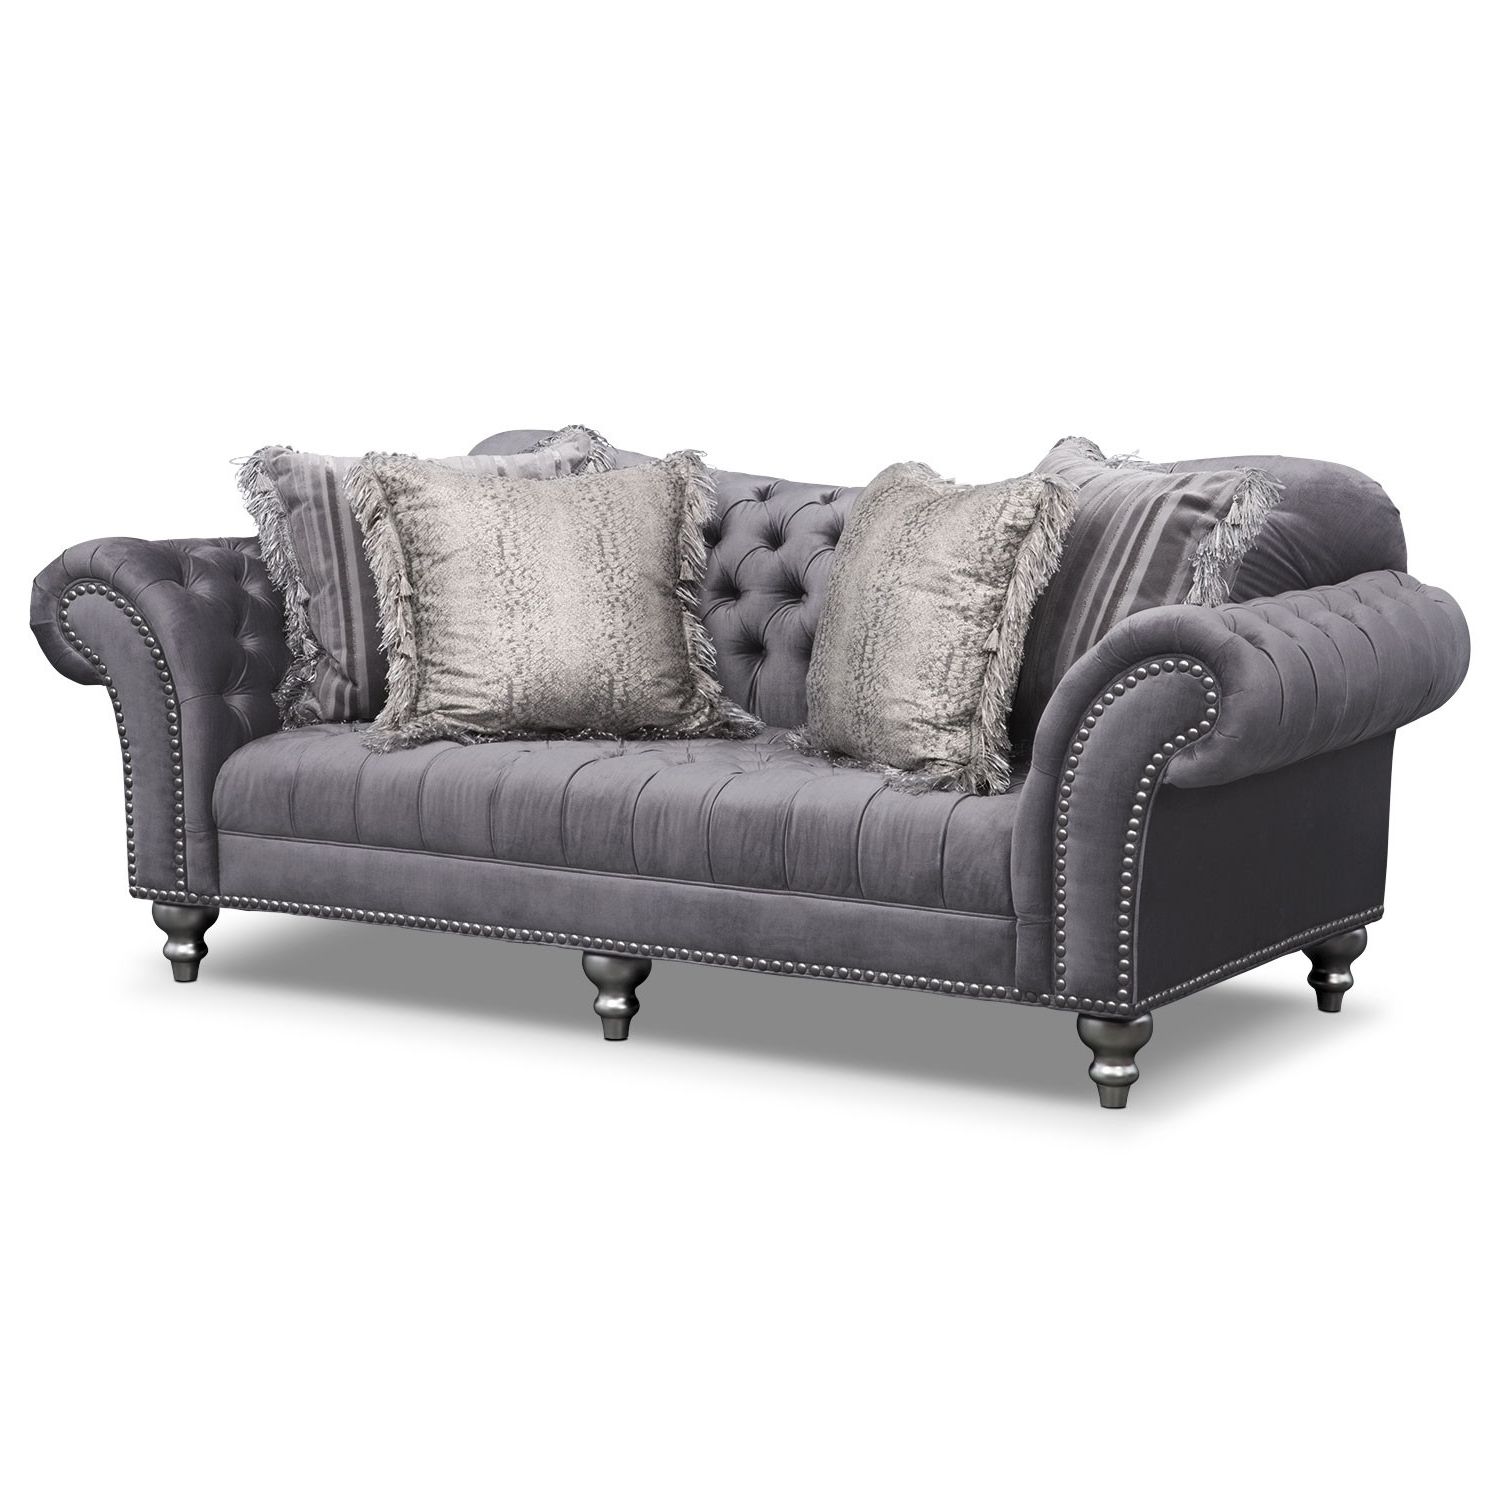 Widely Used Sofa : Cheap Grey Sofa Grey Sofa Set Modern Tone Fabric Unusual For Unusual Sofa (View 3 of 20)